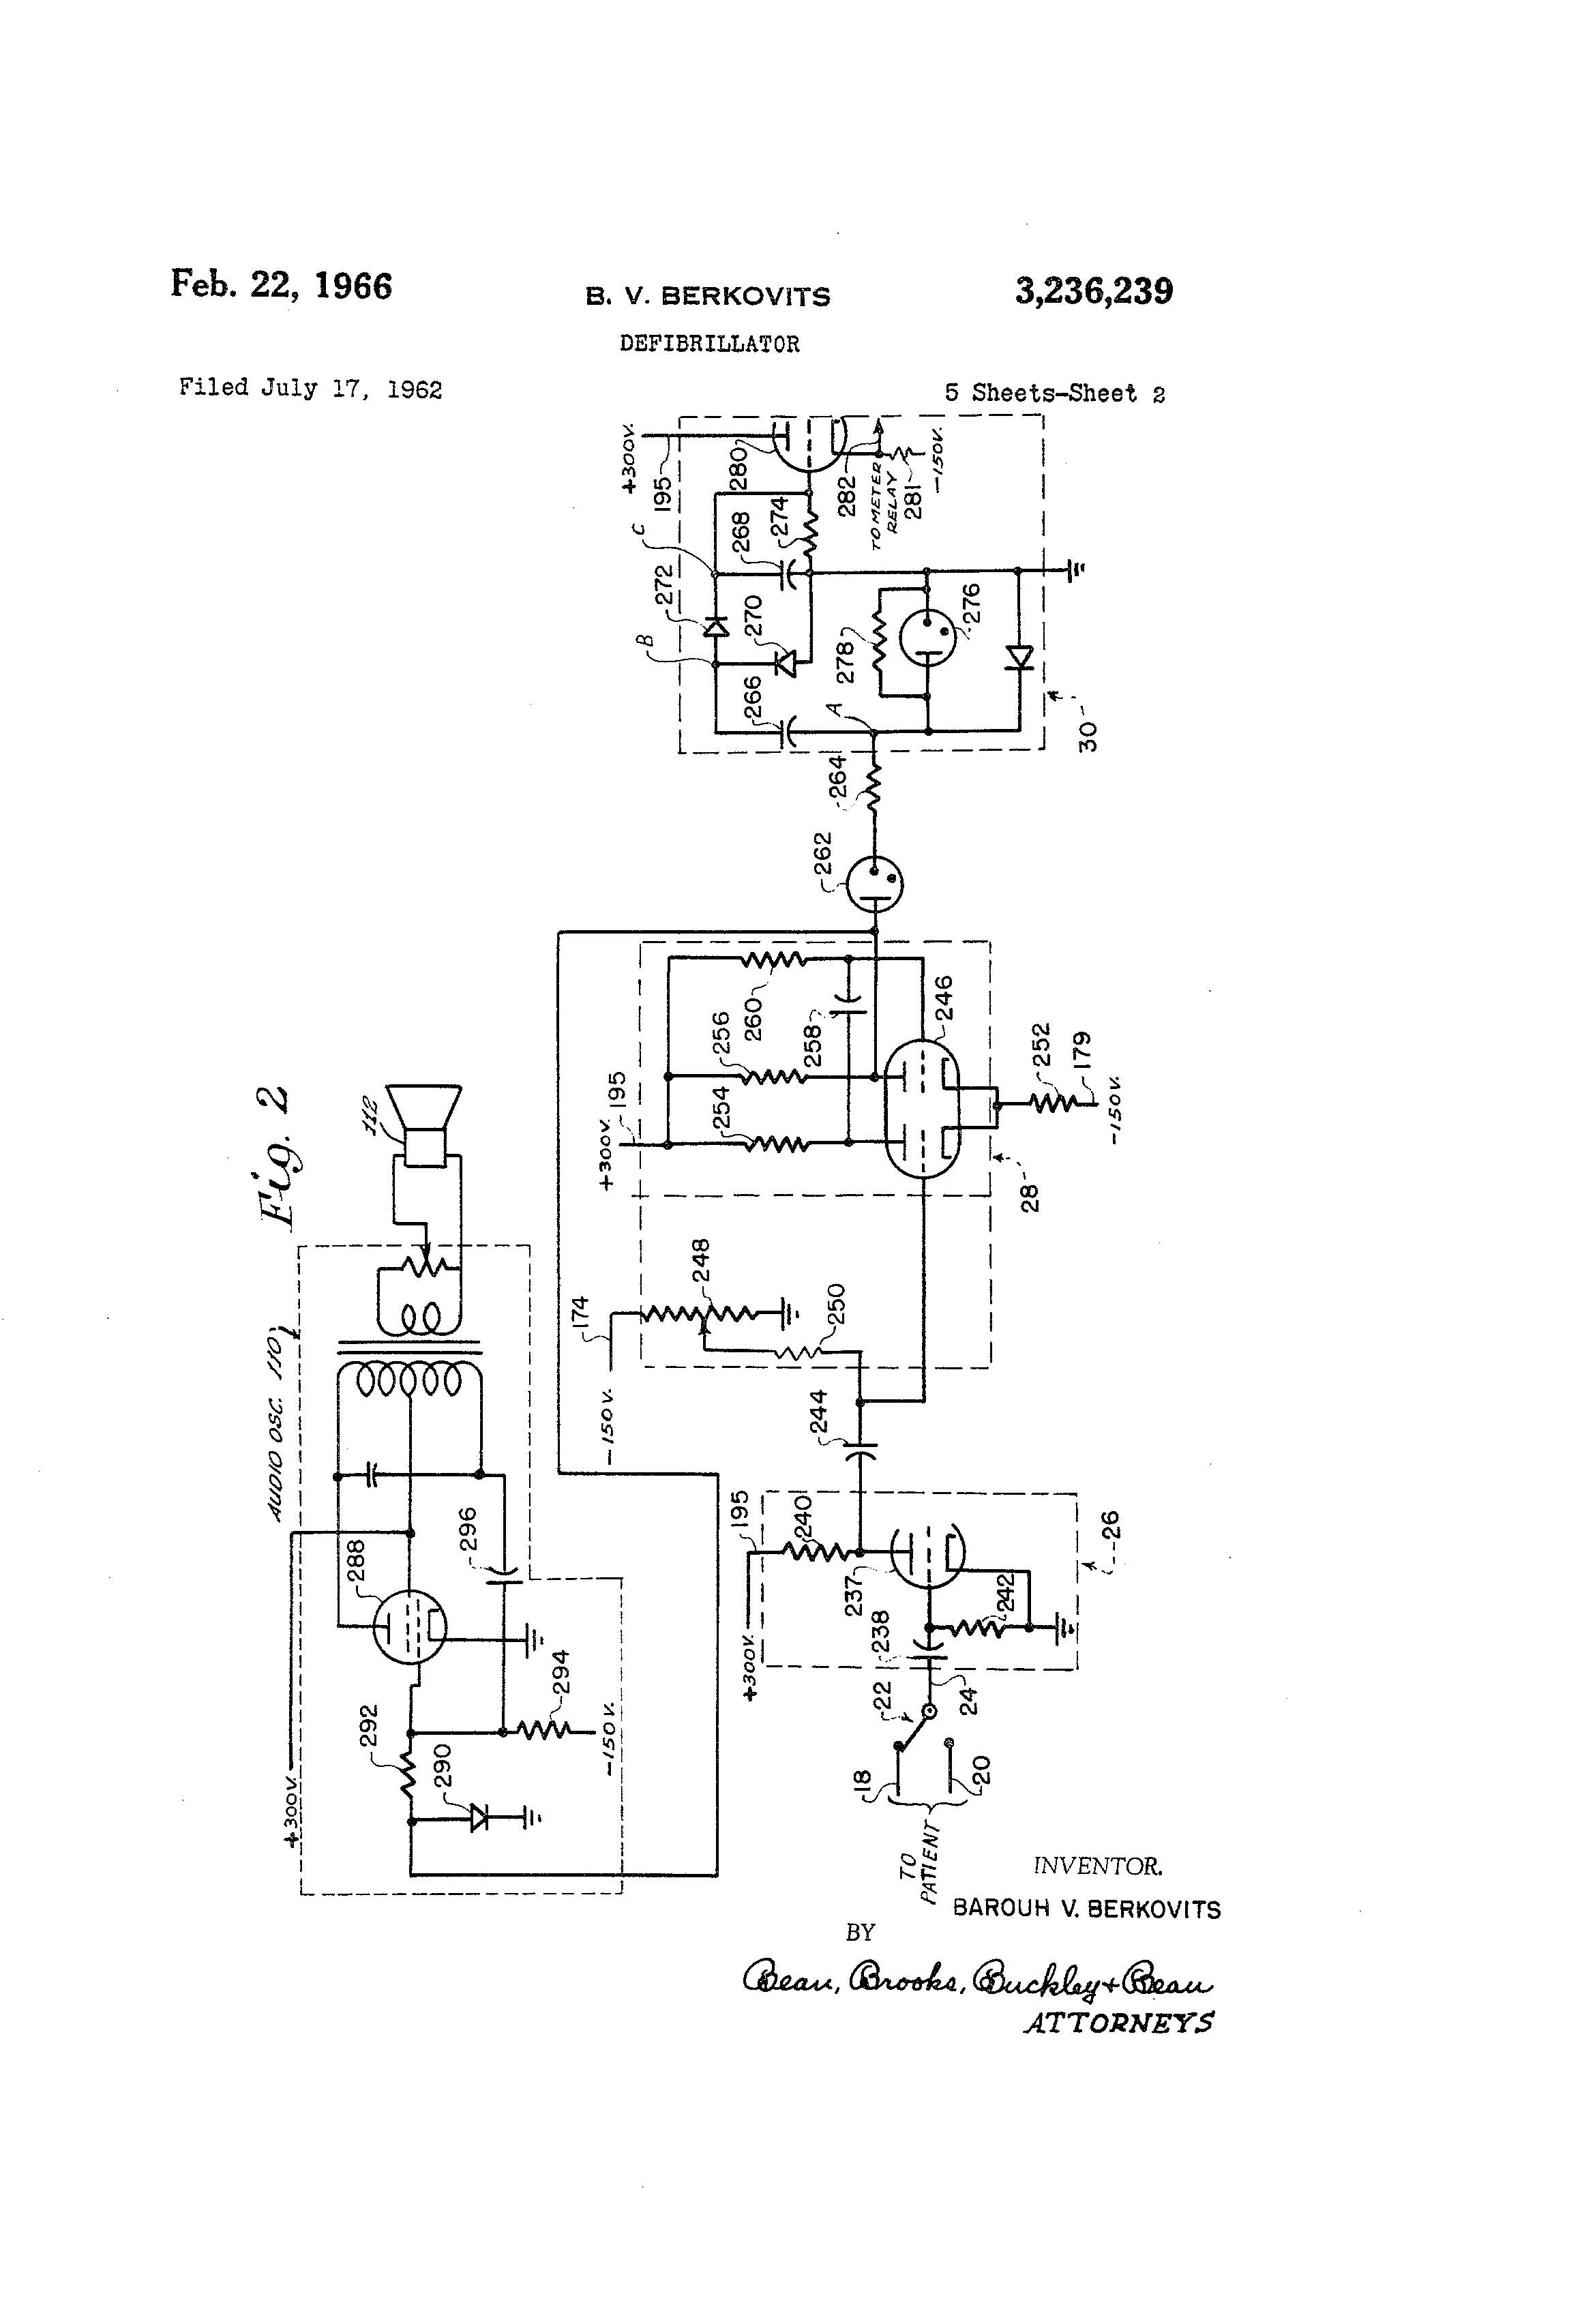 Patent-Illustration-Defibrillator_Page_2